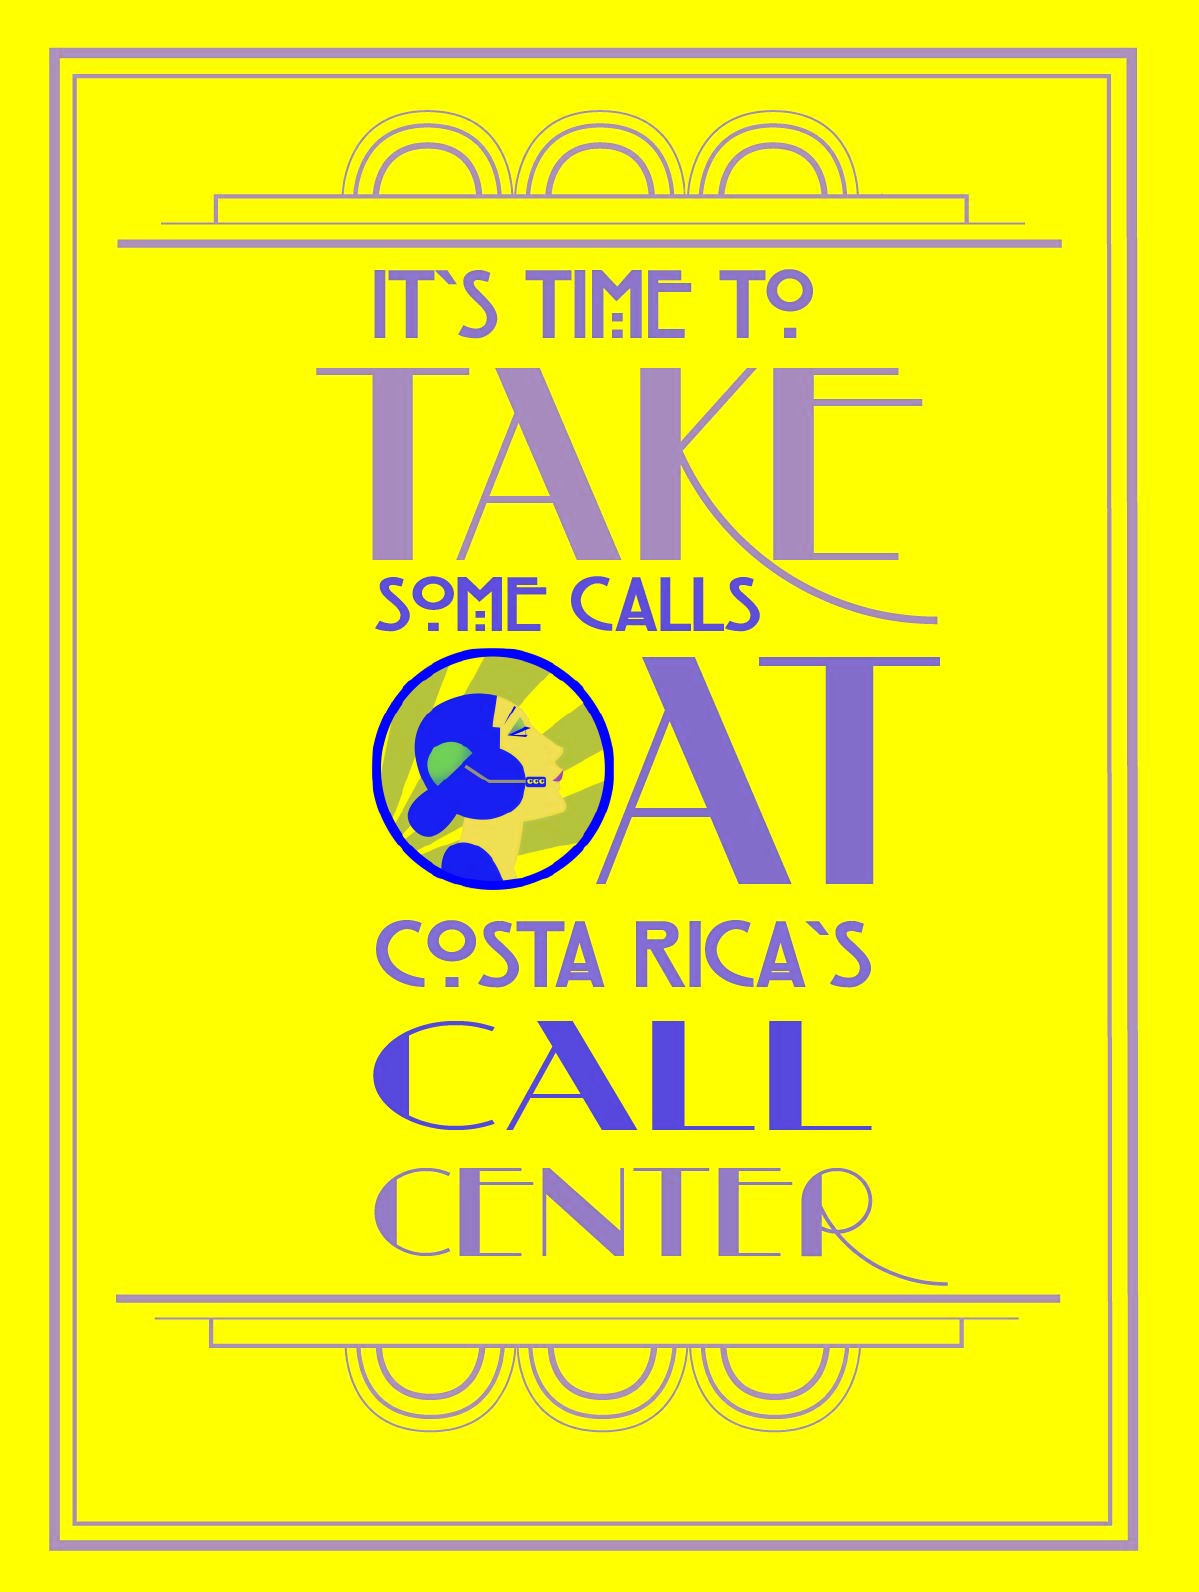 CALL CENTRE USA COSTA RICA.jpg  by richardblank